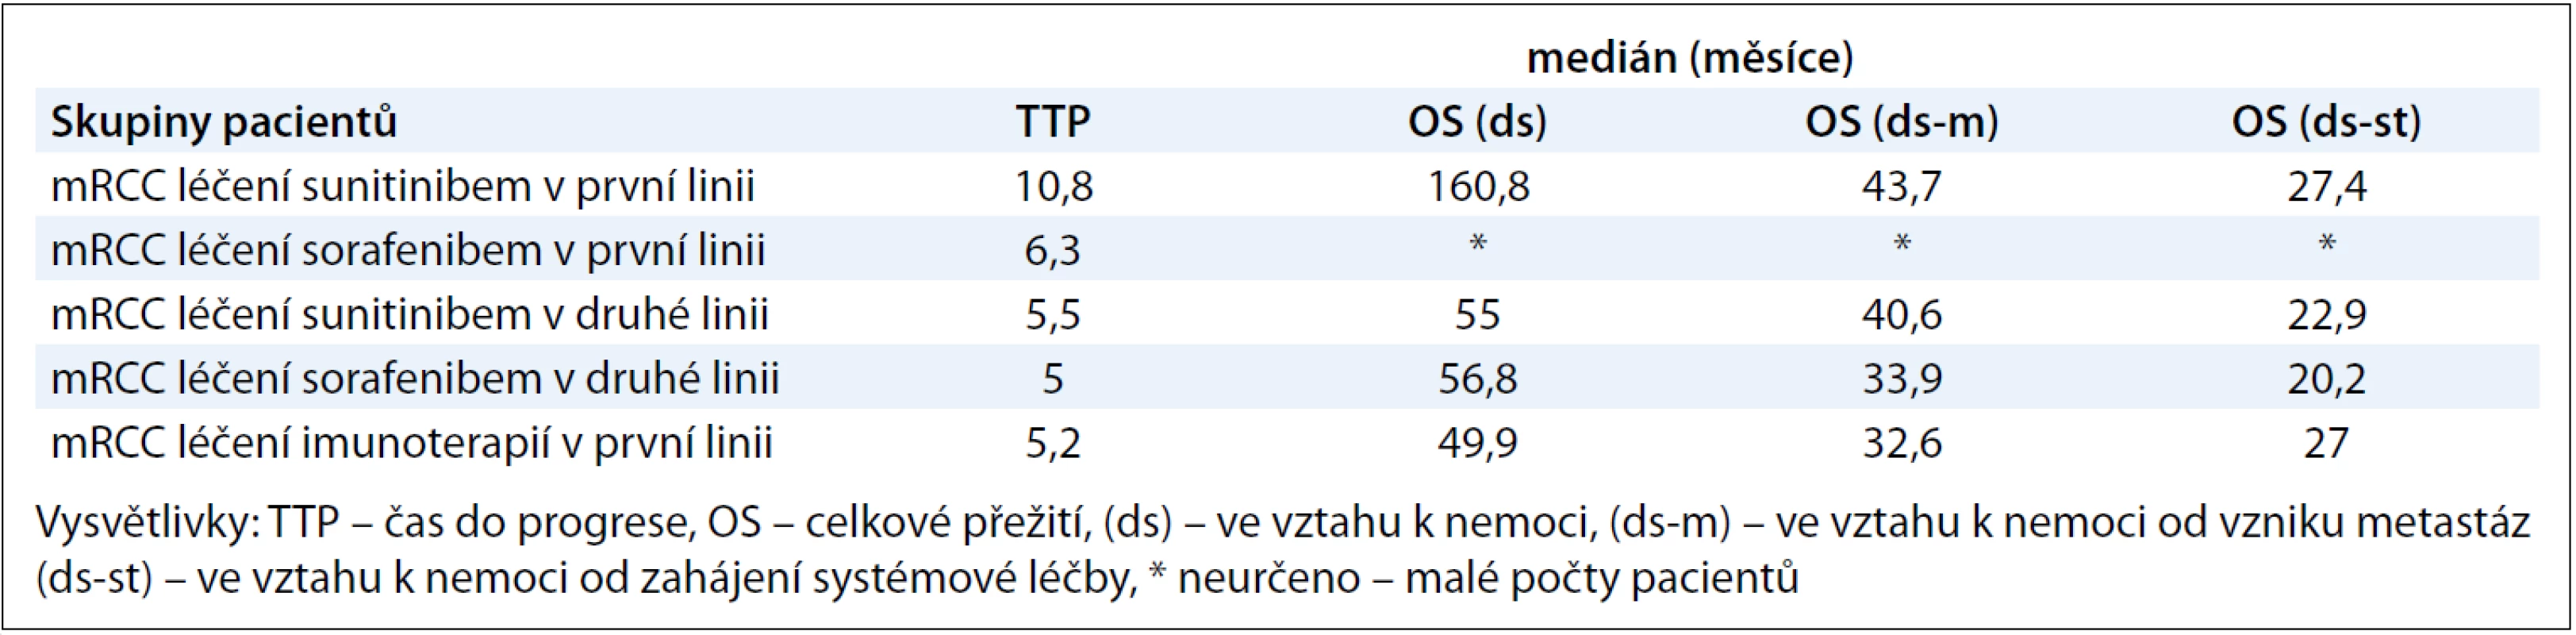 Výsledky TT P a OS u vybraných podskupin pacientů.